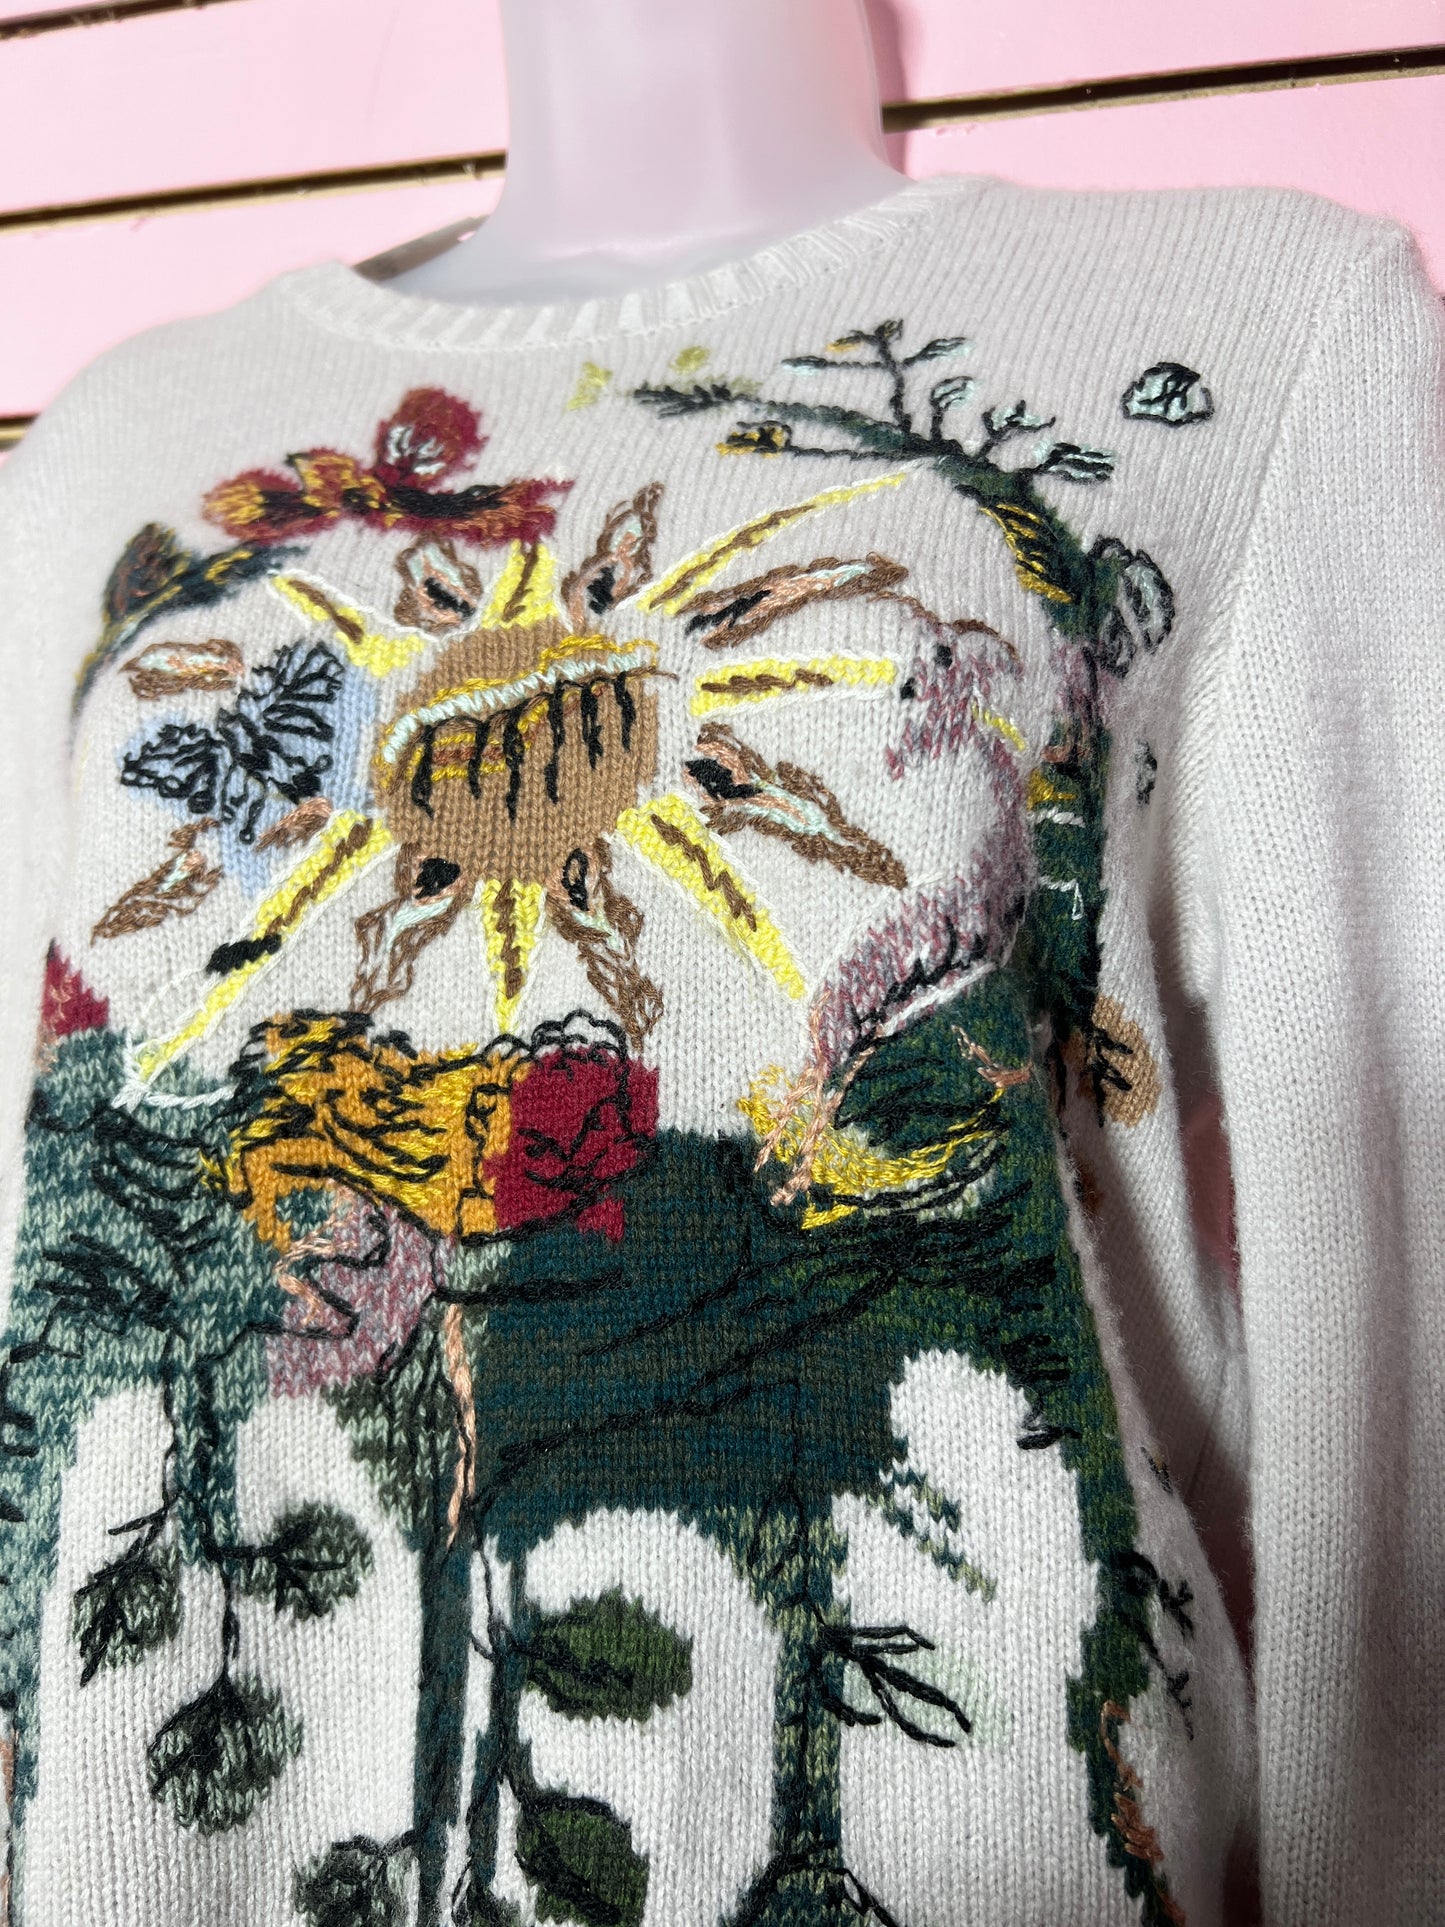 Dior Cashmere Knit Sweater